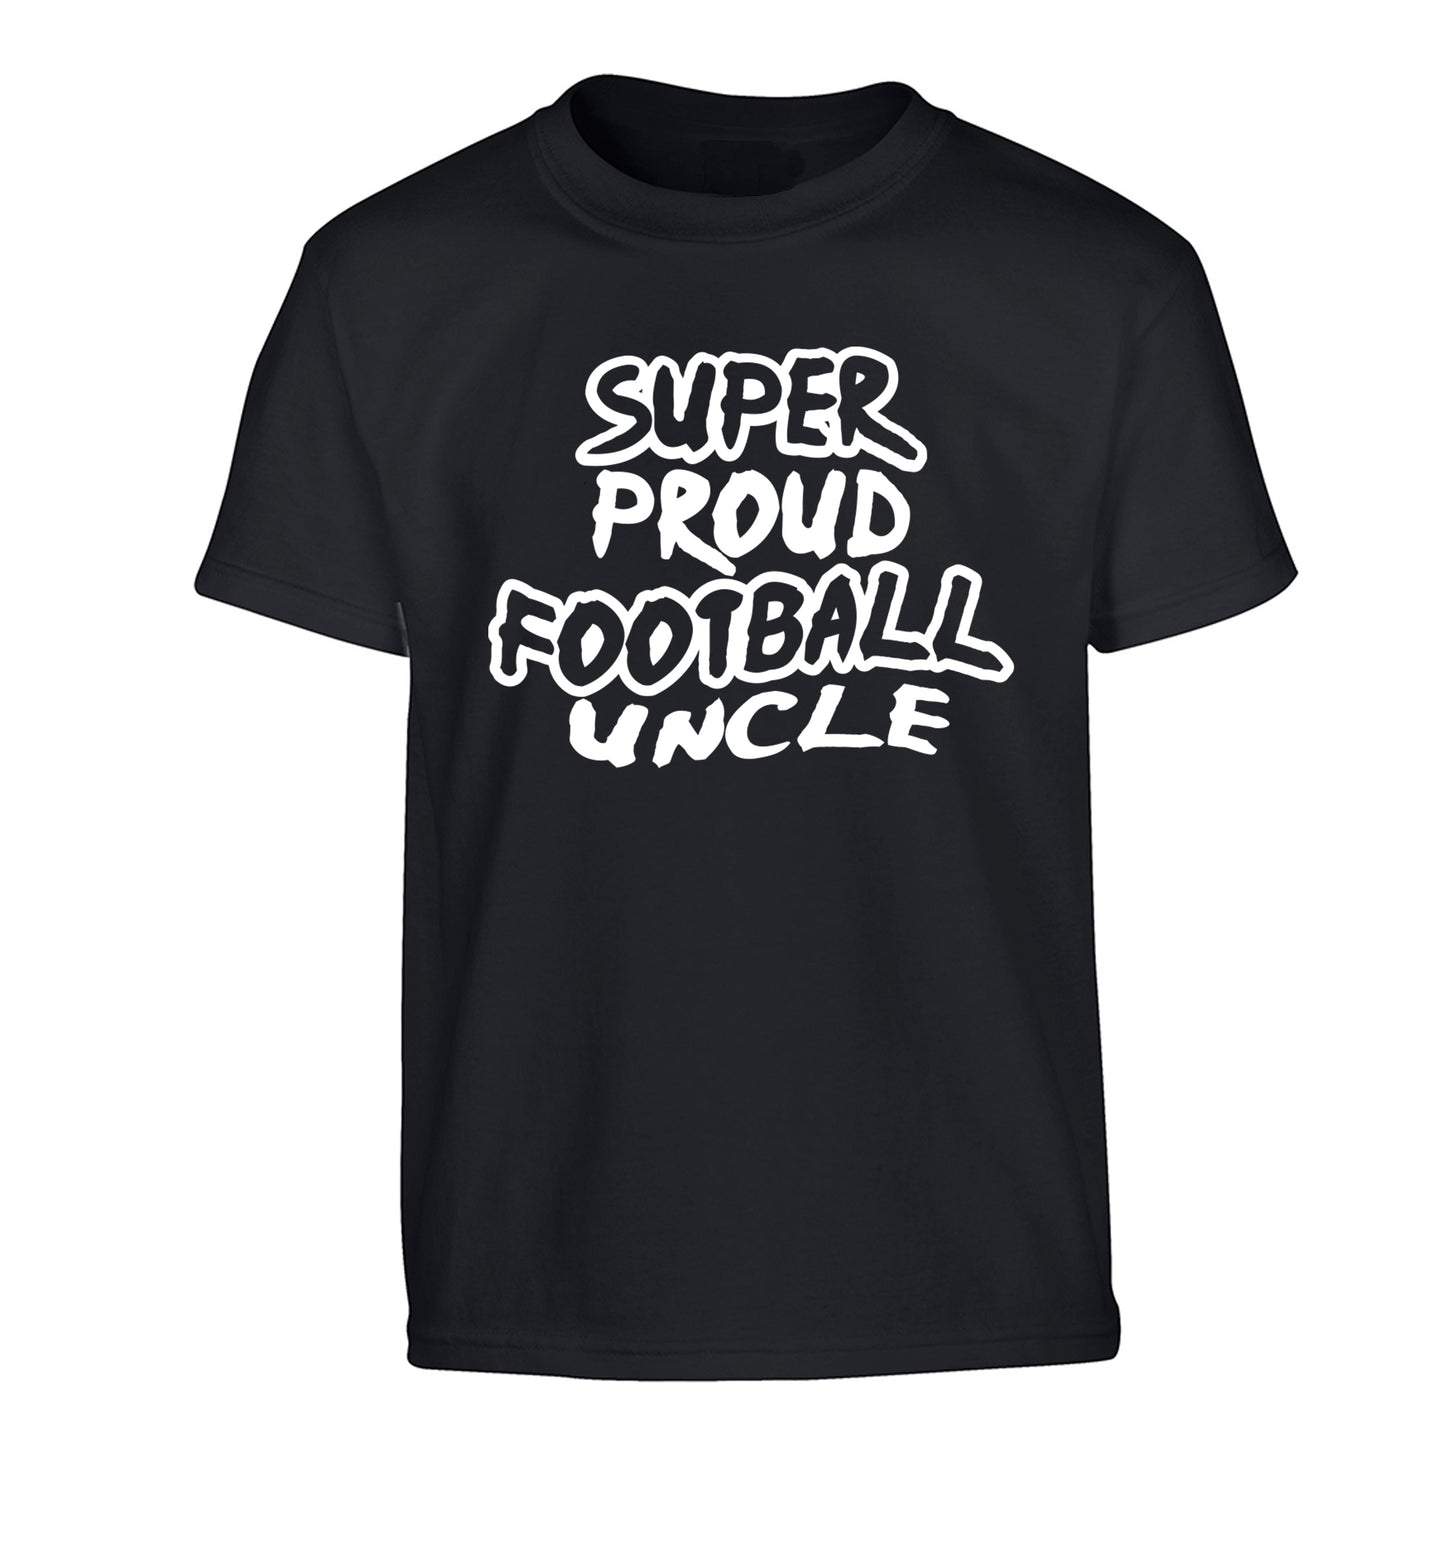 Super proud football uncle Children's black Tshirt 12-14 Years